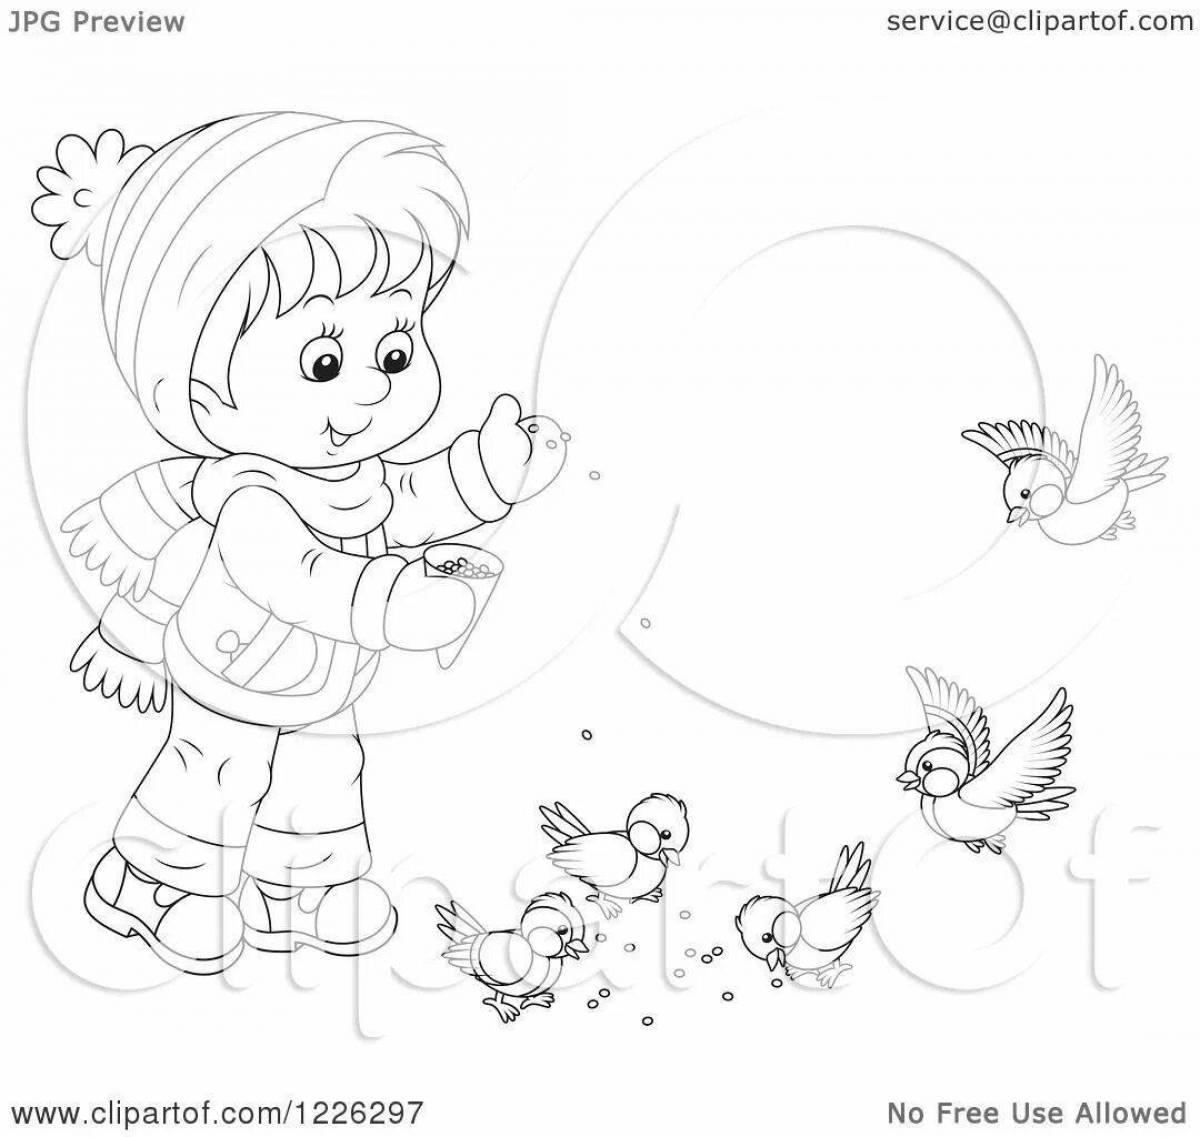 Glitzy coloring page bird feeding in winter